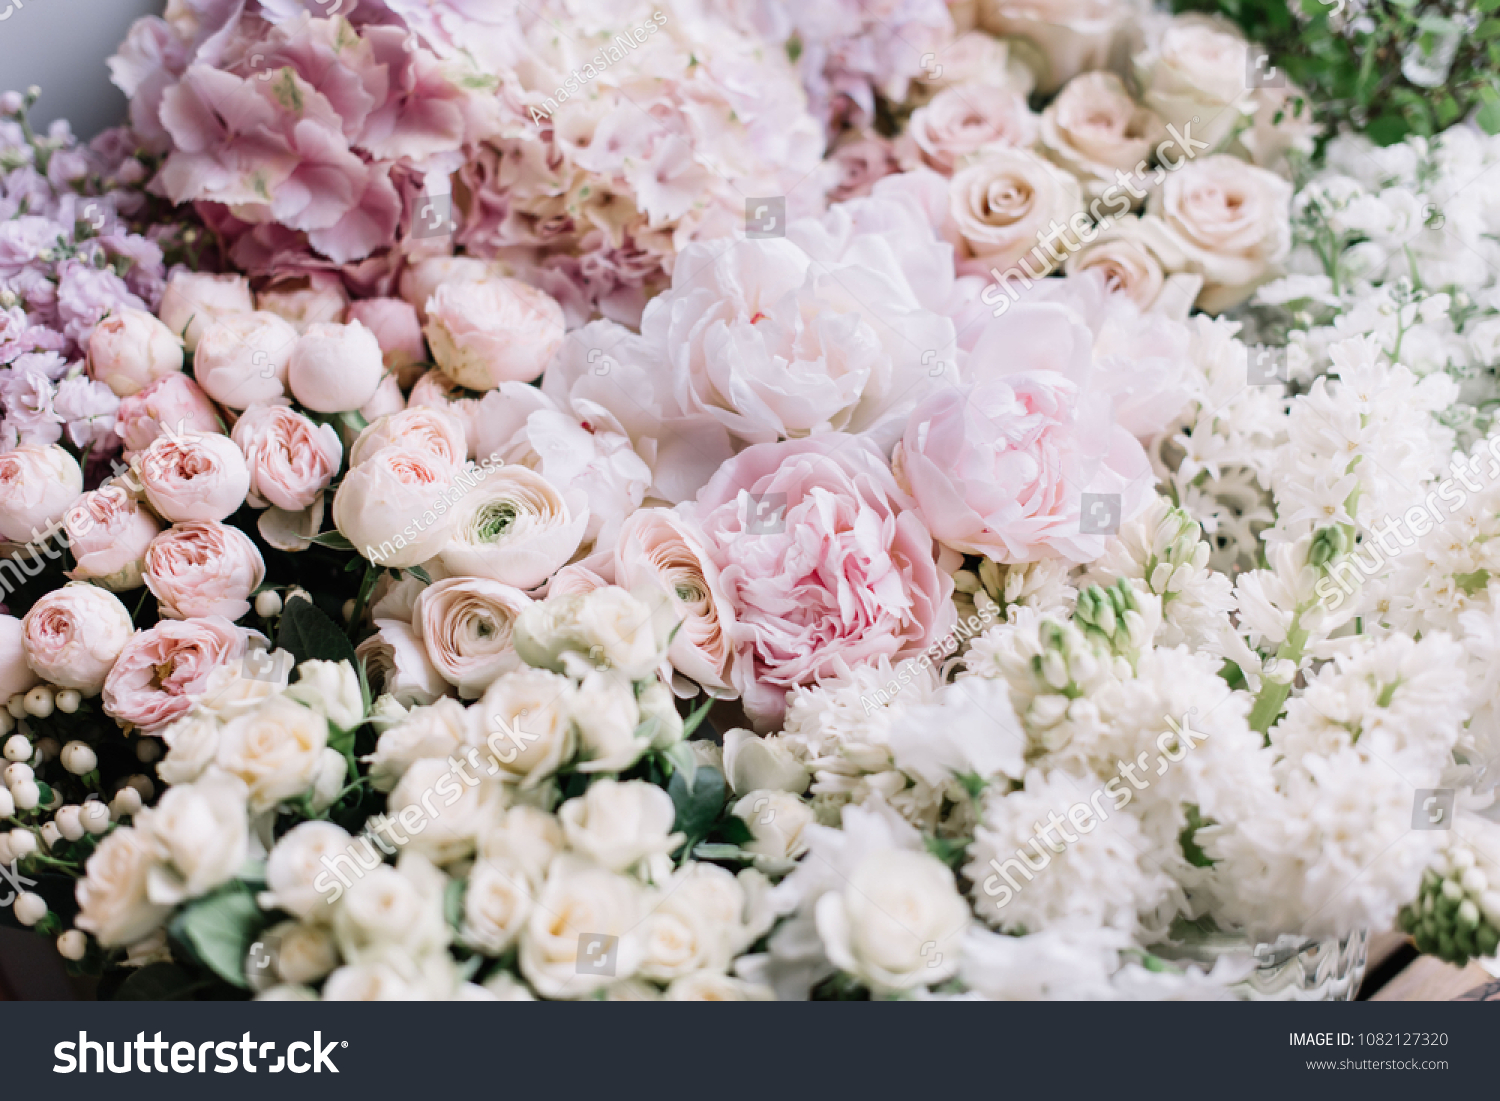 Beautiful flower bed of fresh peonies, roses, hyacinths, hydrangeas, ranunculus in tender pink colors at the florist shop, top view #1082127320